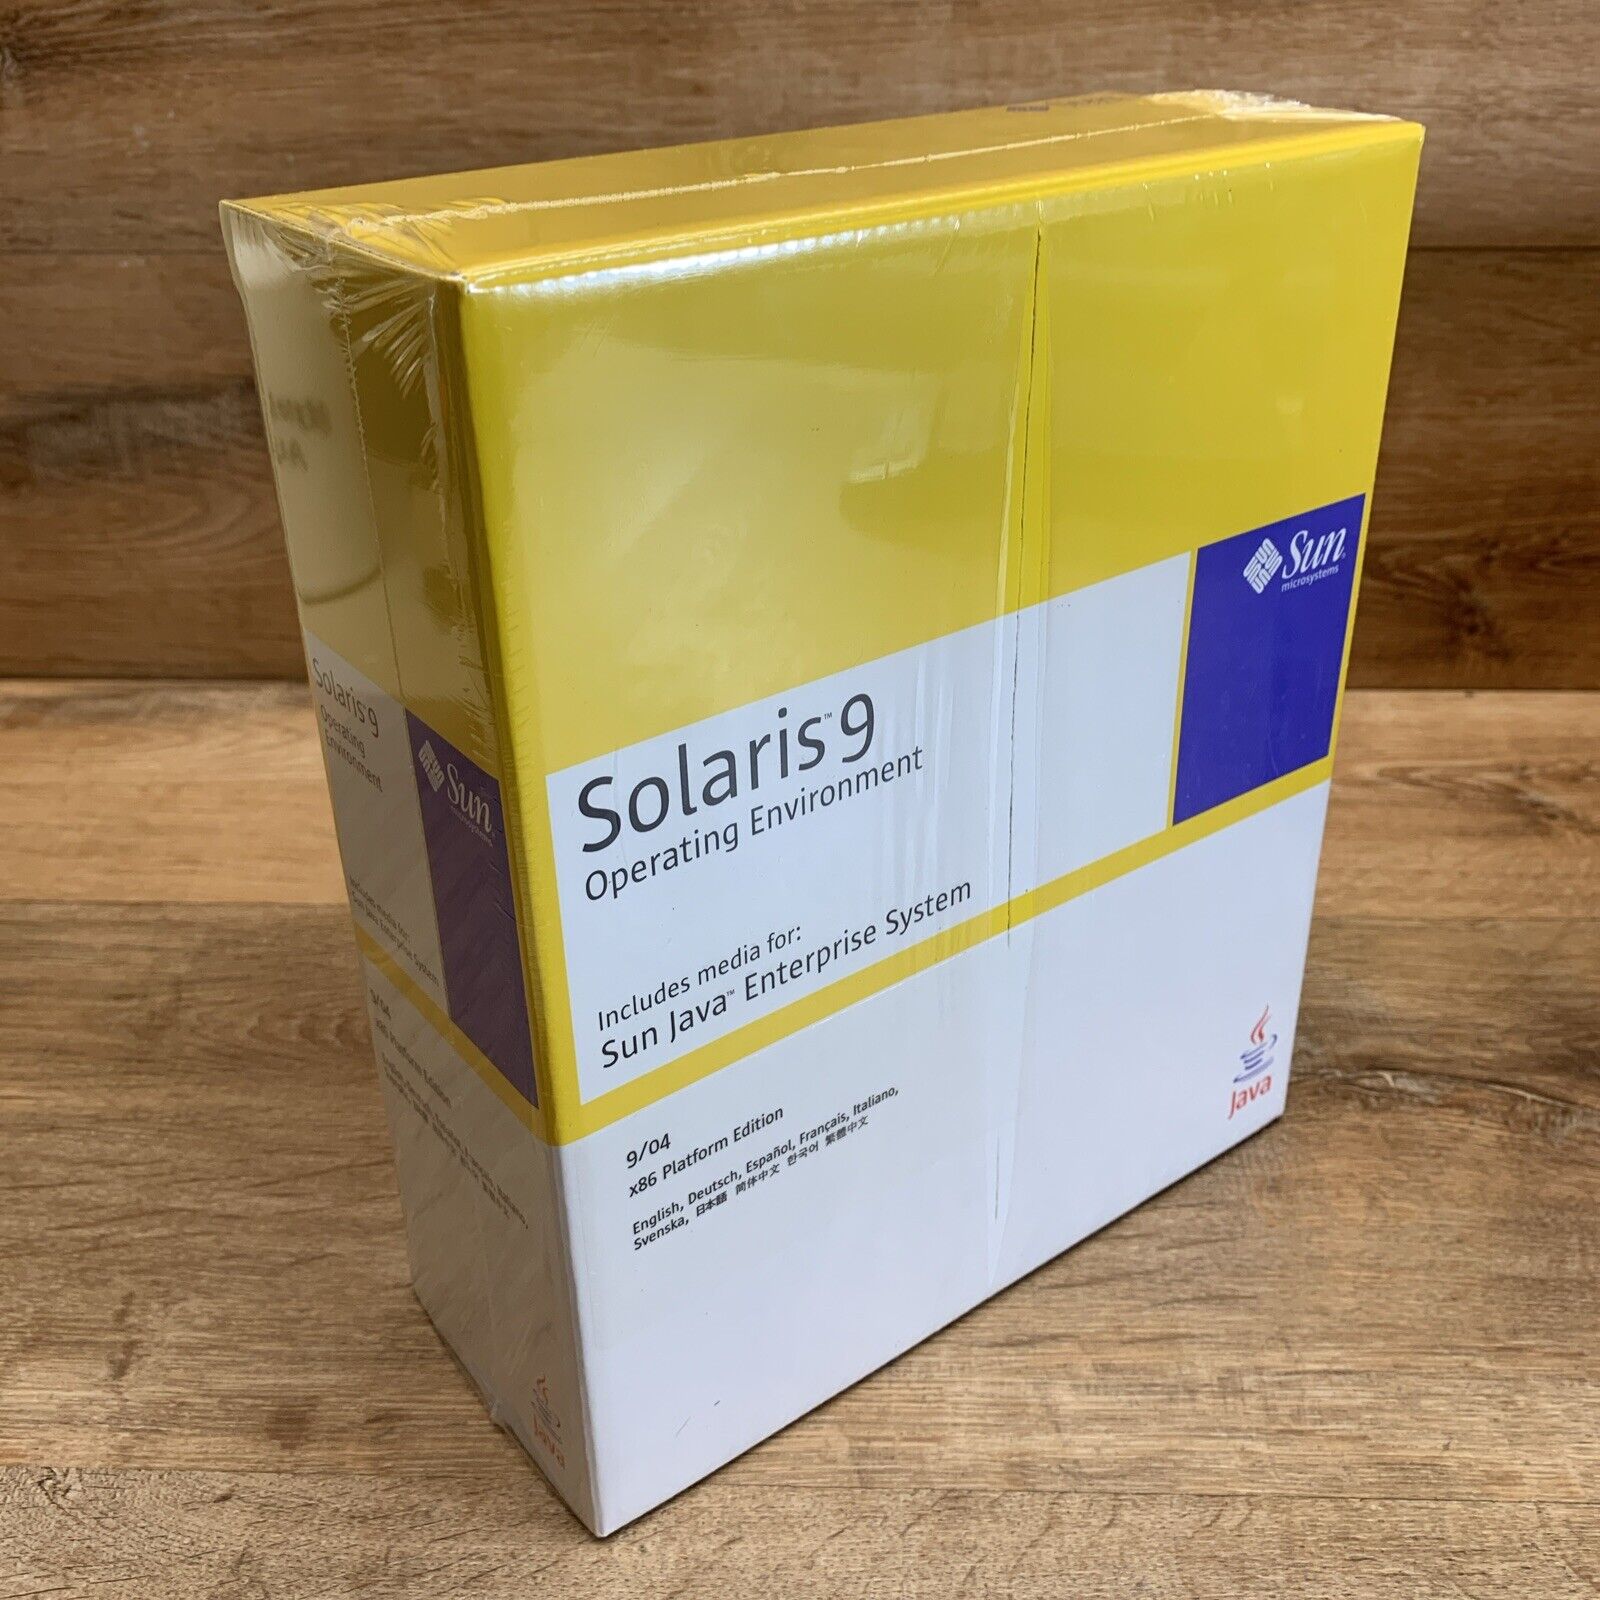 NEW Sun Microsystems Solaris 9 Operating Environment Sun Java